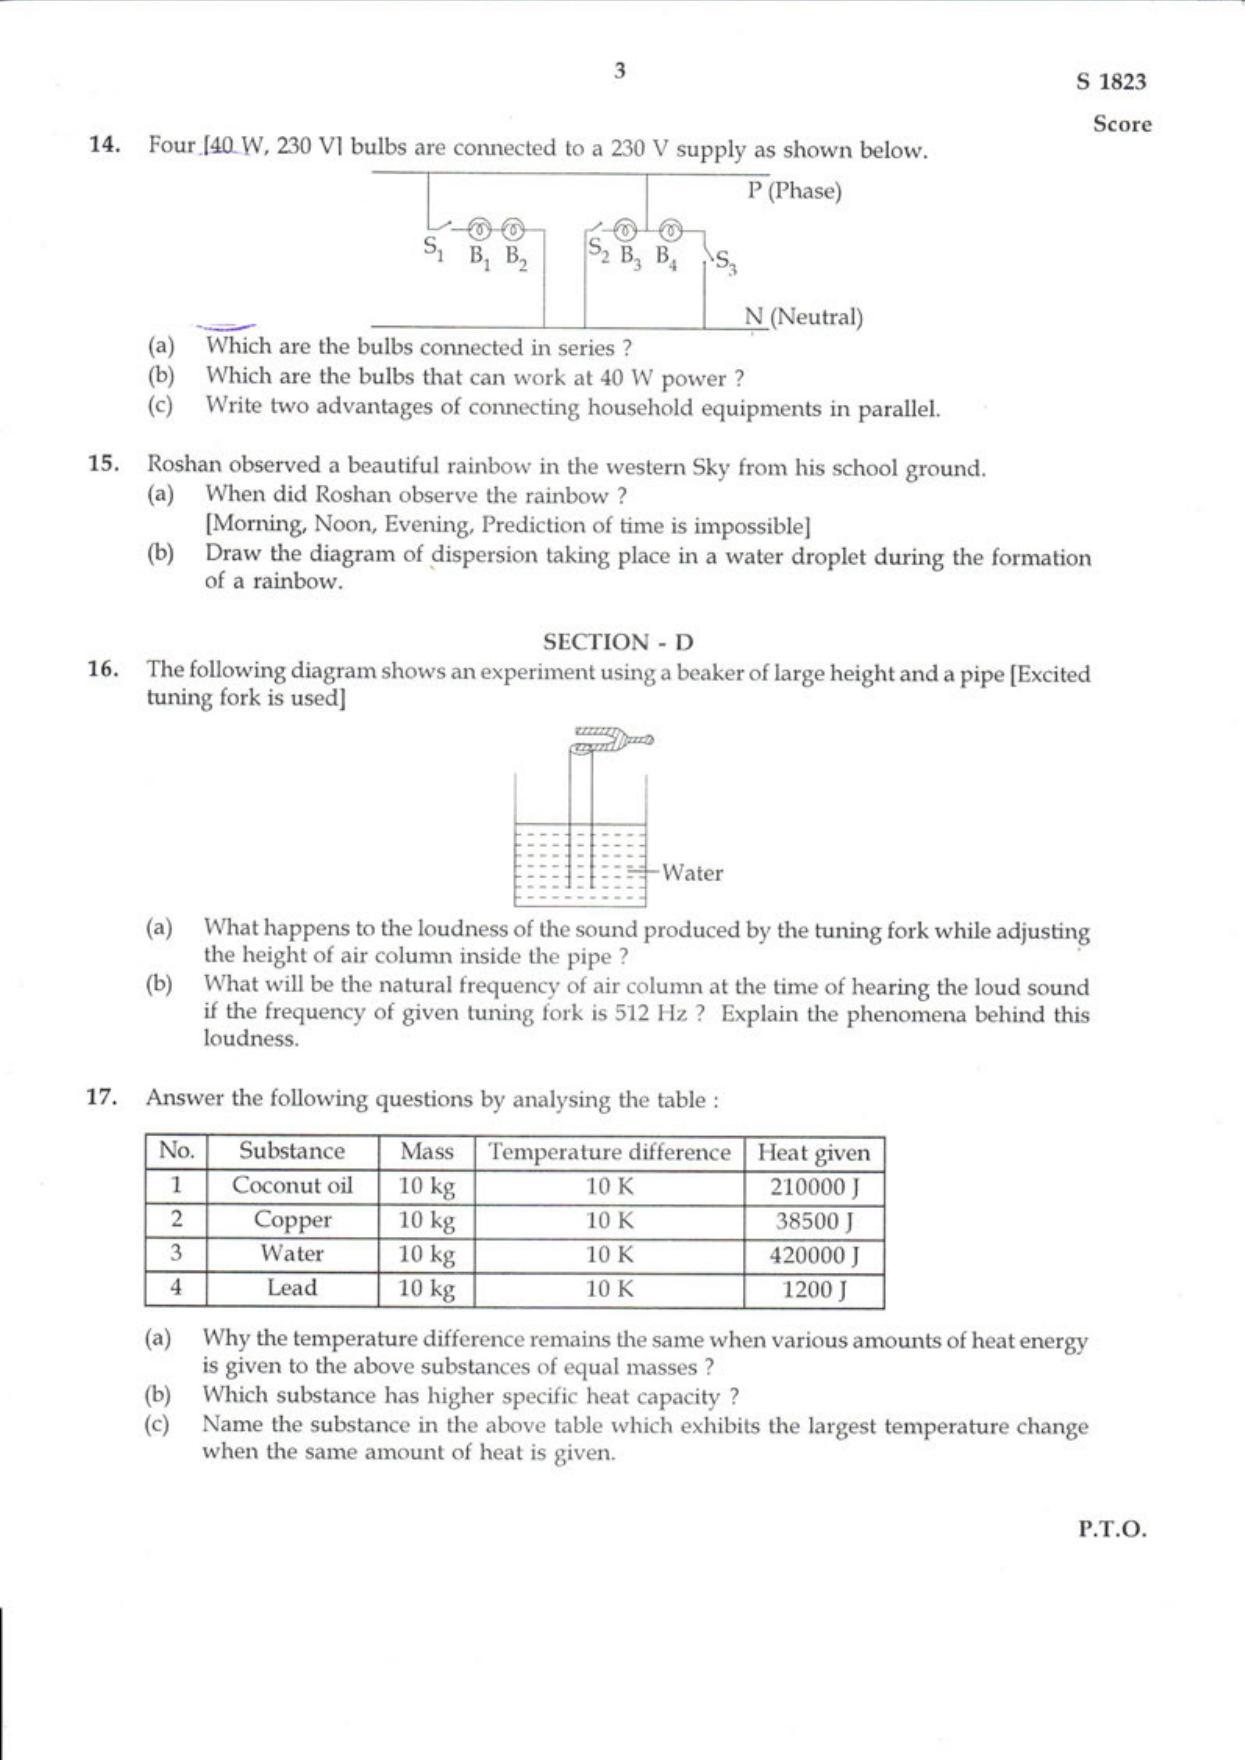 Kerala SSLC 2018 Physics (EM) Question Paper - Page 2